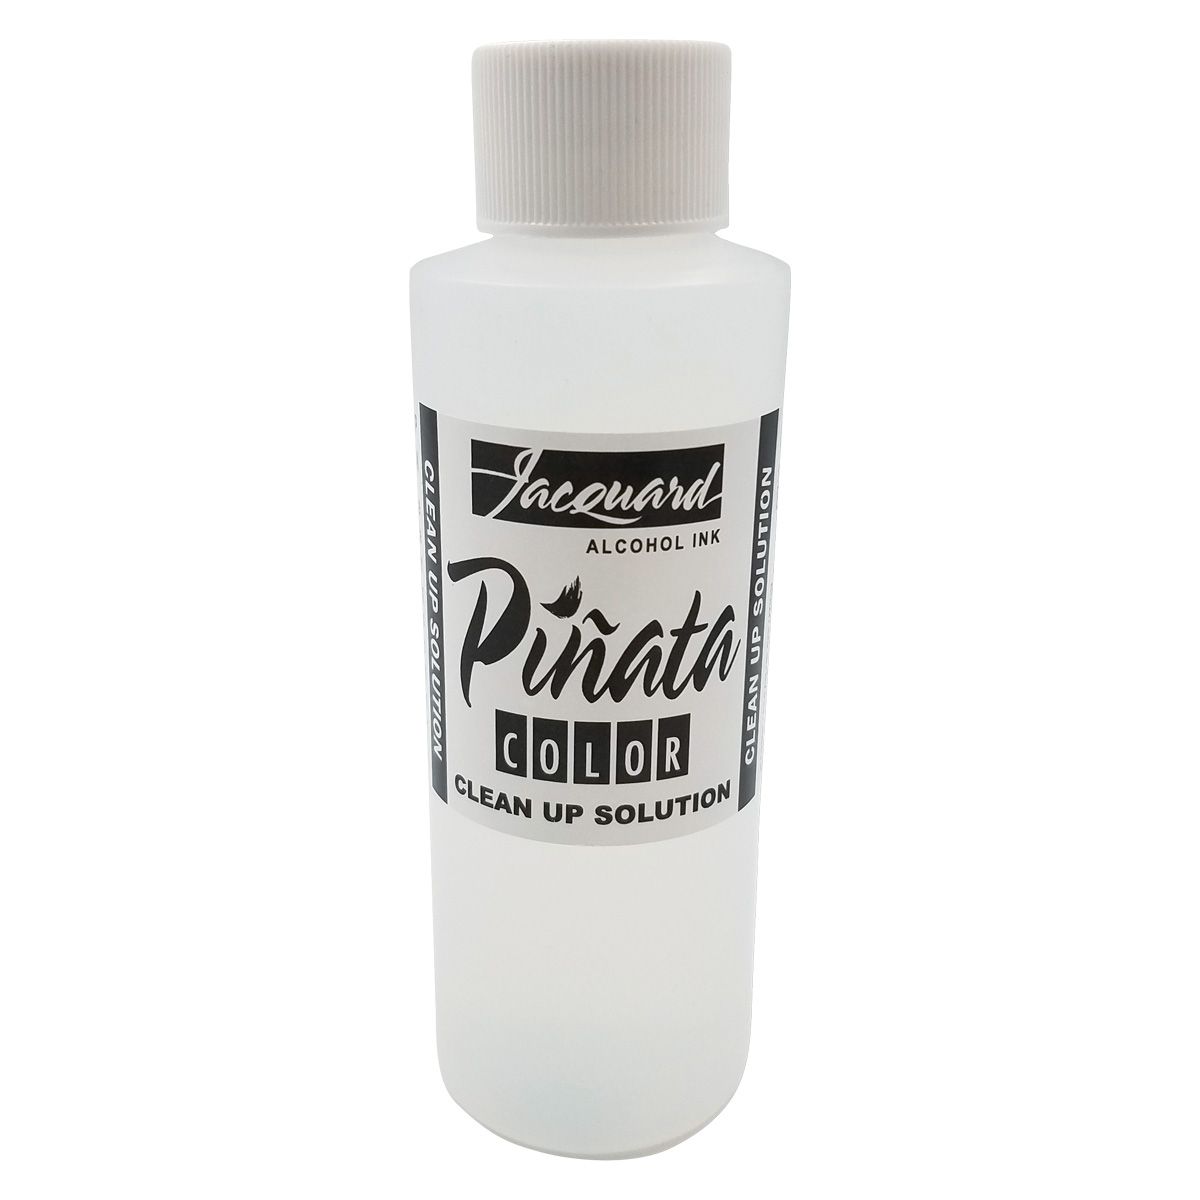 Pinata Alcohol Ink - Sunbright Yellow - 4oz